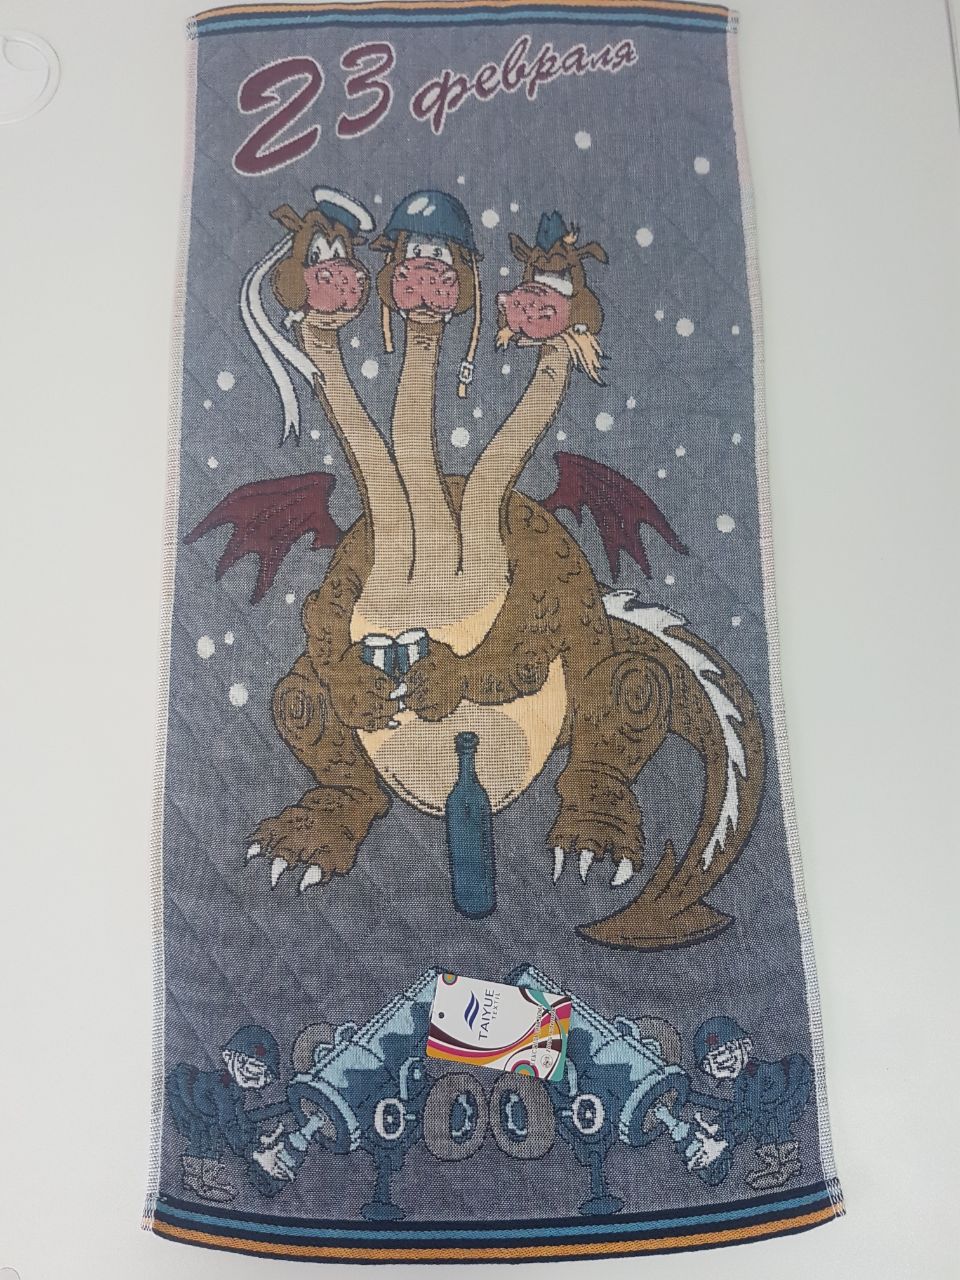 Банное полотенце TAIYUE textil КМ-3575-1Д 23 февраля дракон серый 75х35